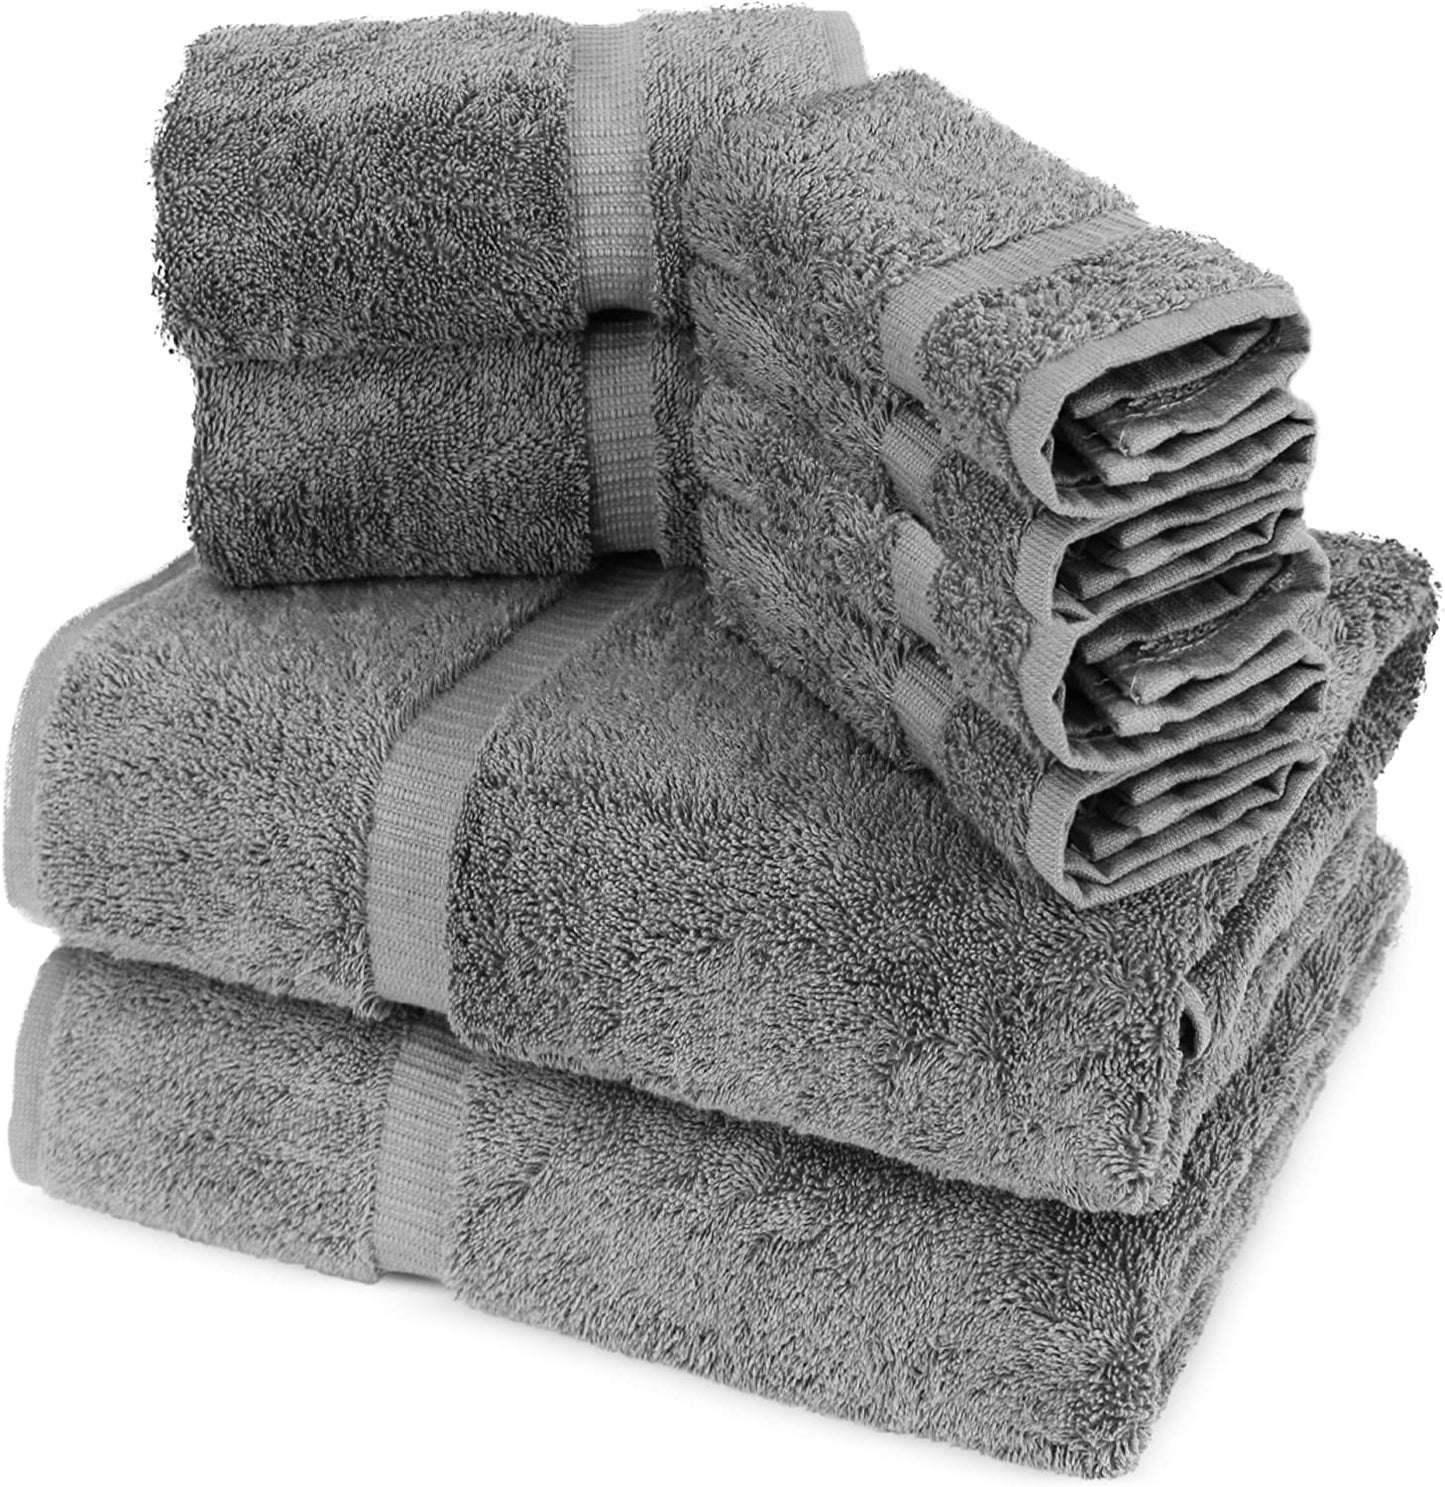 Premium Turkish Cotton Super Soft and Absorbent Towels (8-Piece Towel Set, Gray)